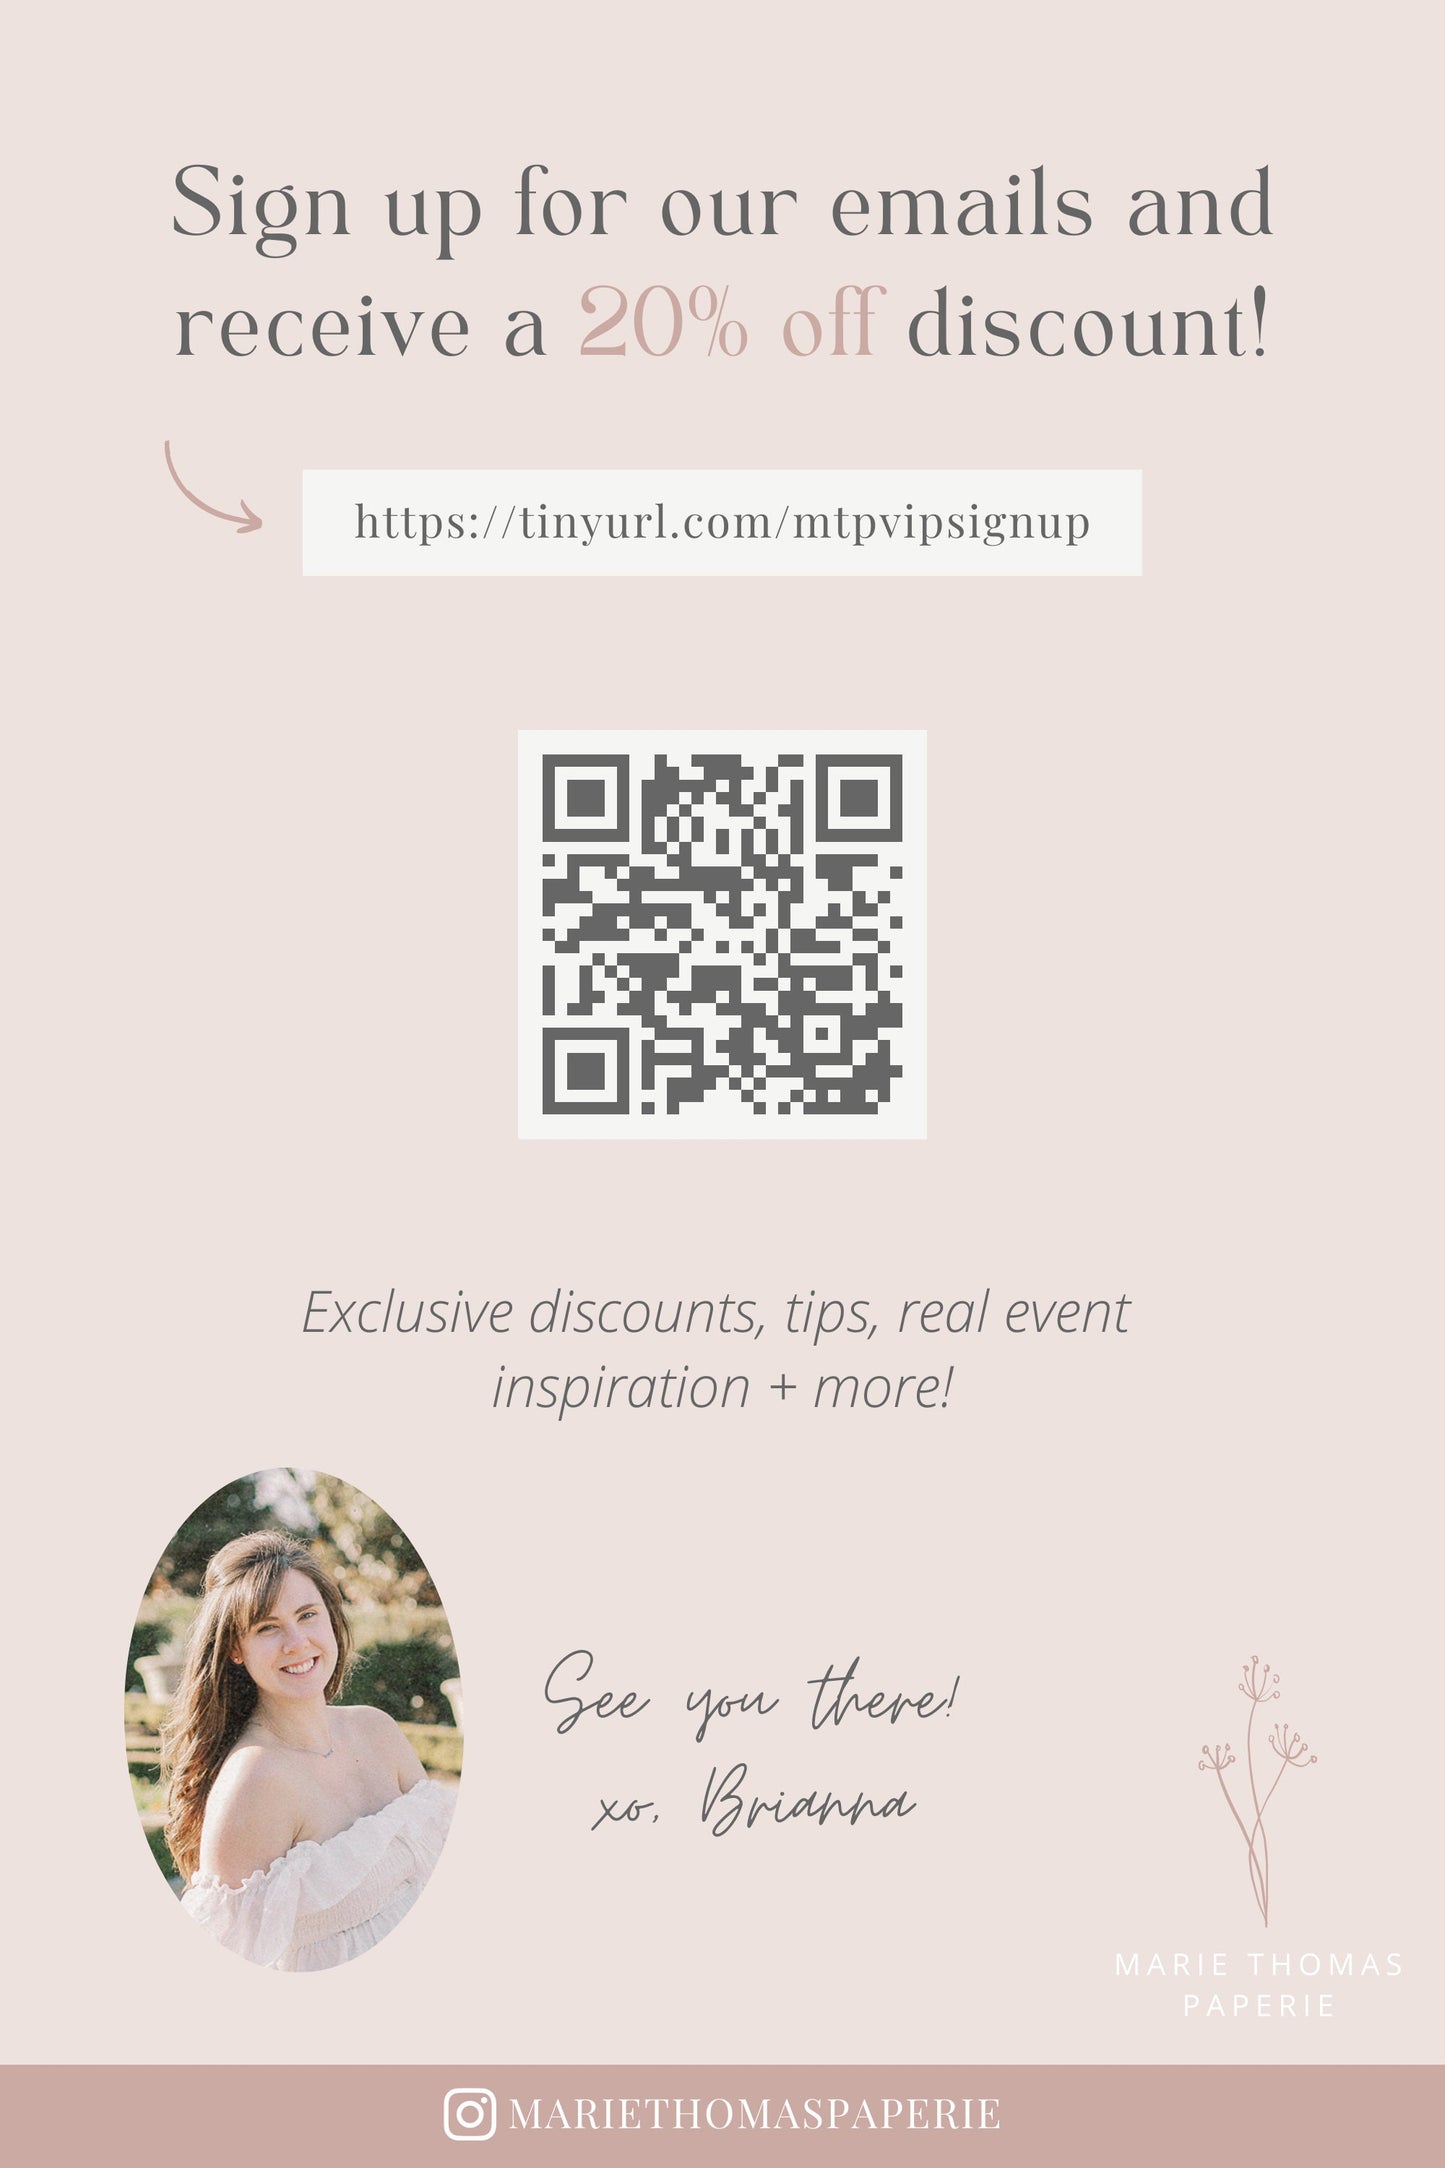 Editable Burgundy & Navy Floral Wedding Place Card Wedding Name Card Escort Card Template